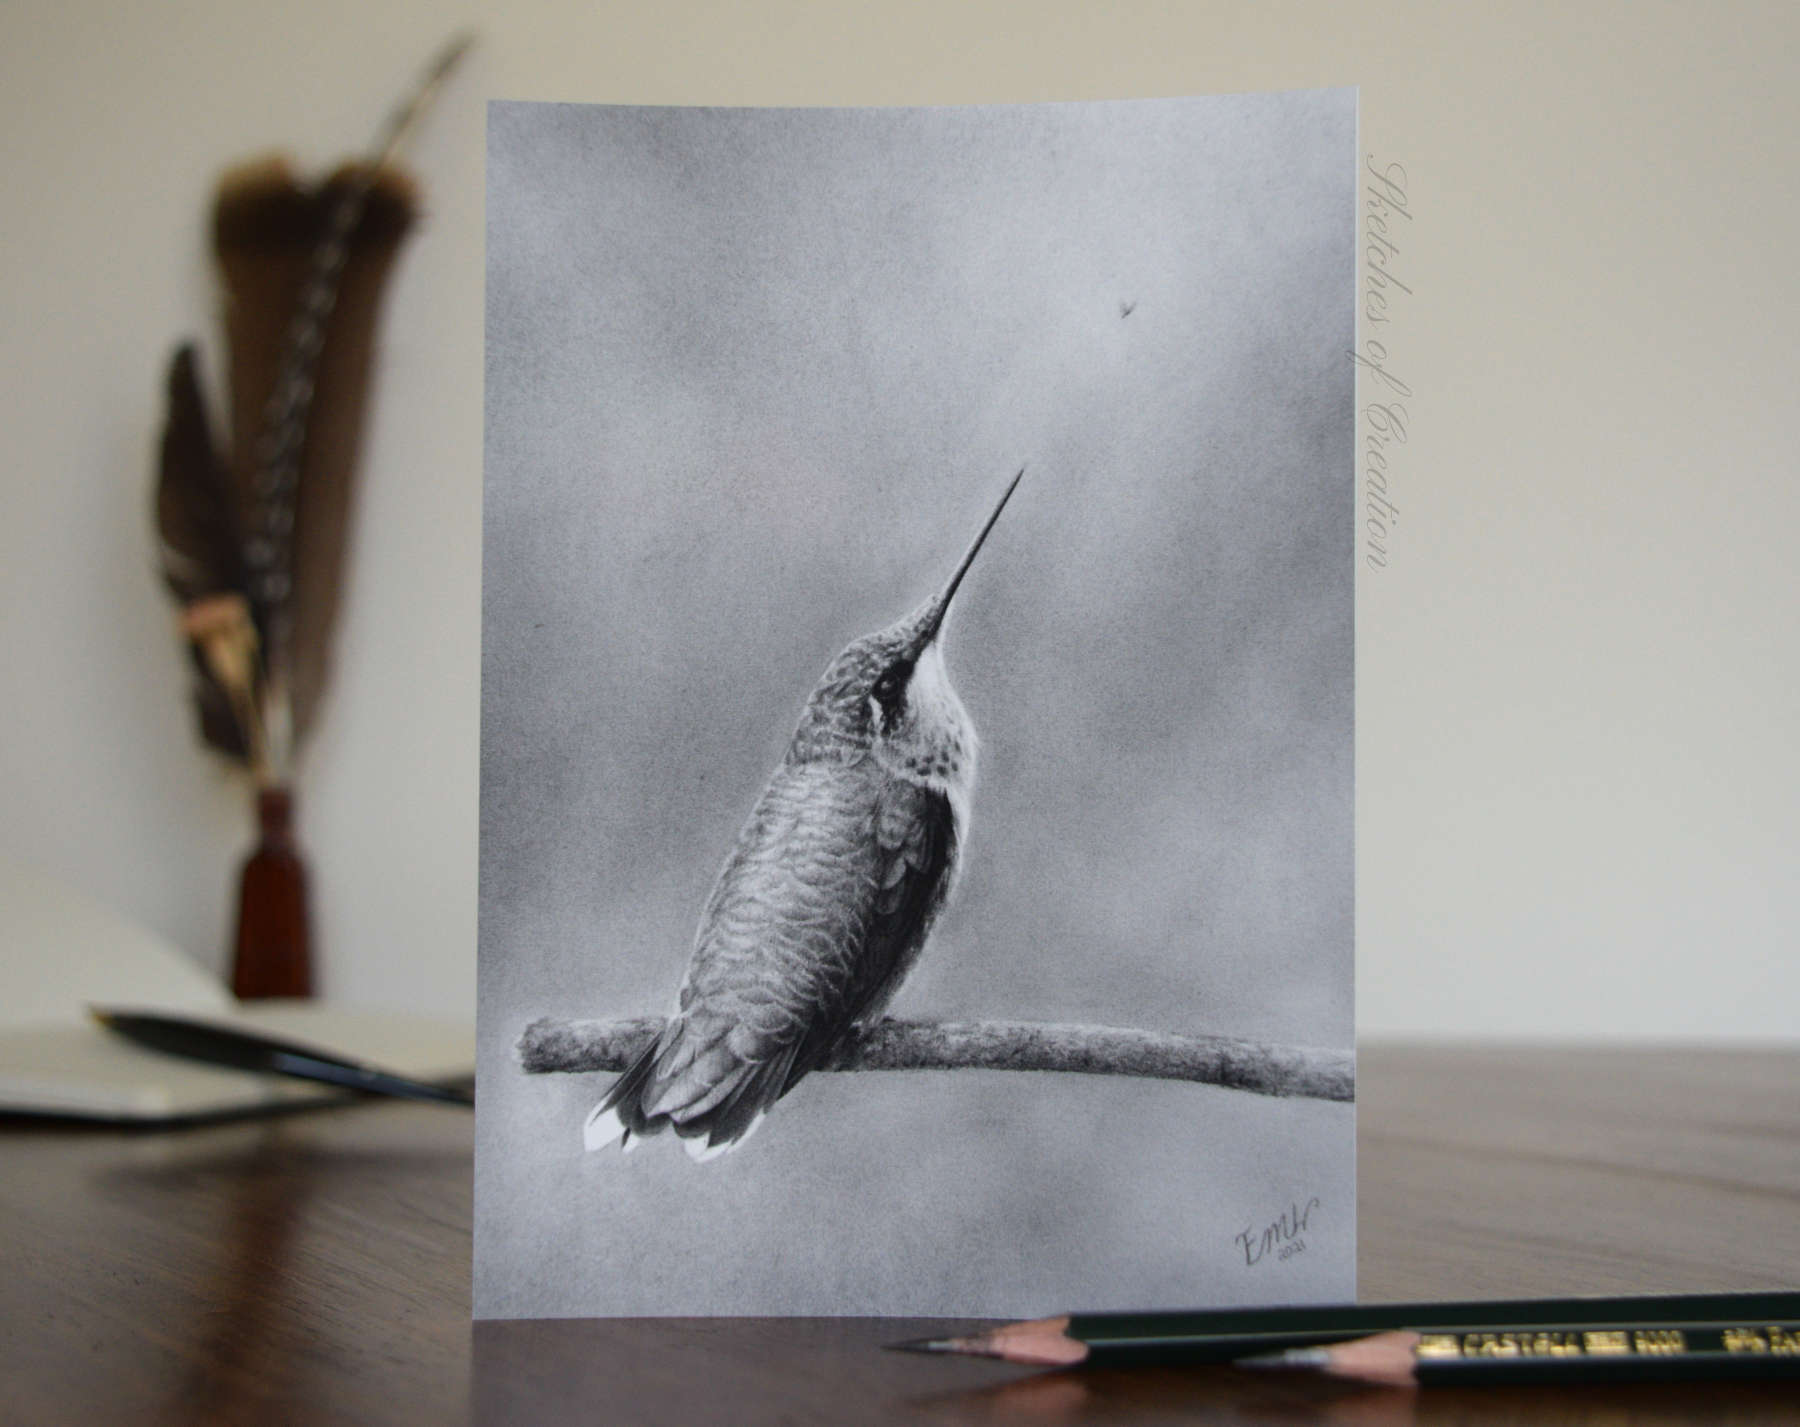 A print of a hummingbird